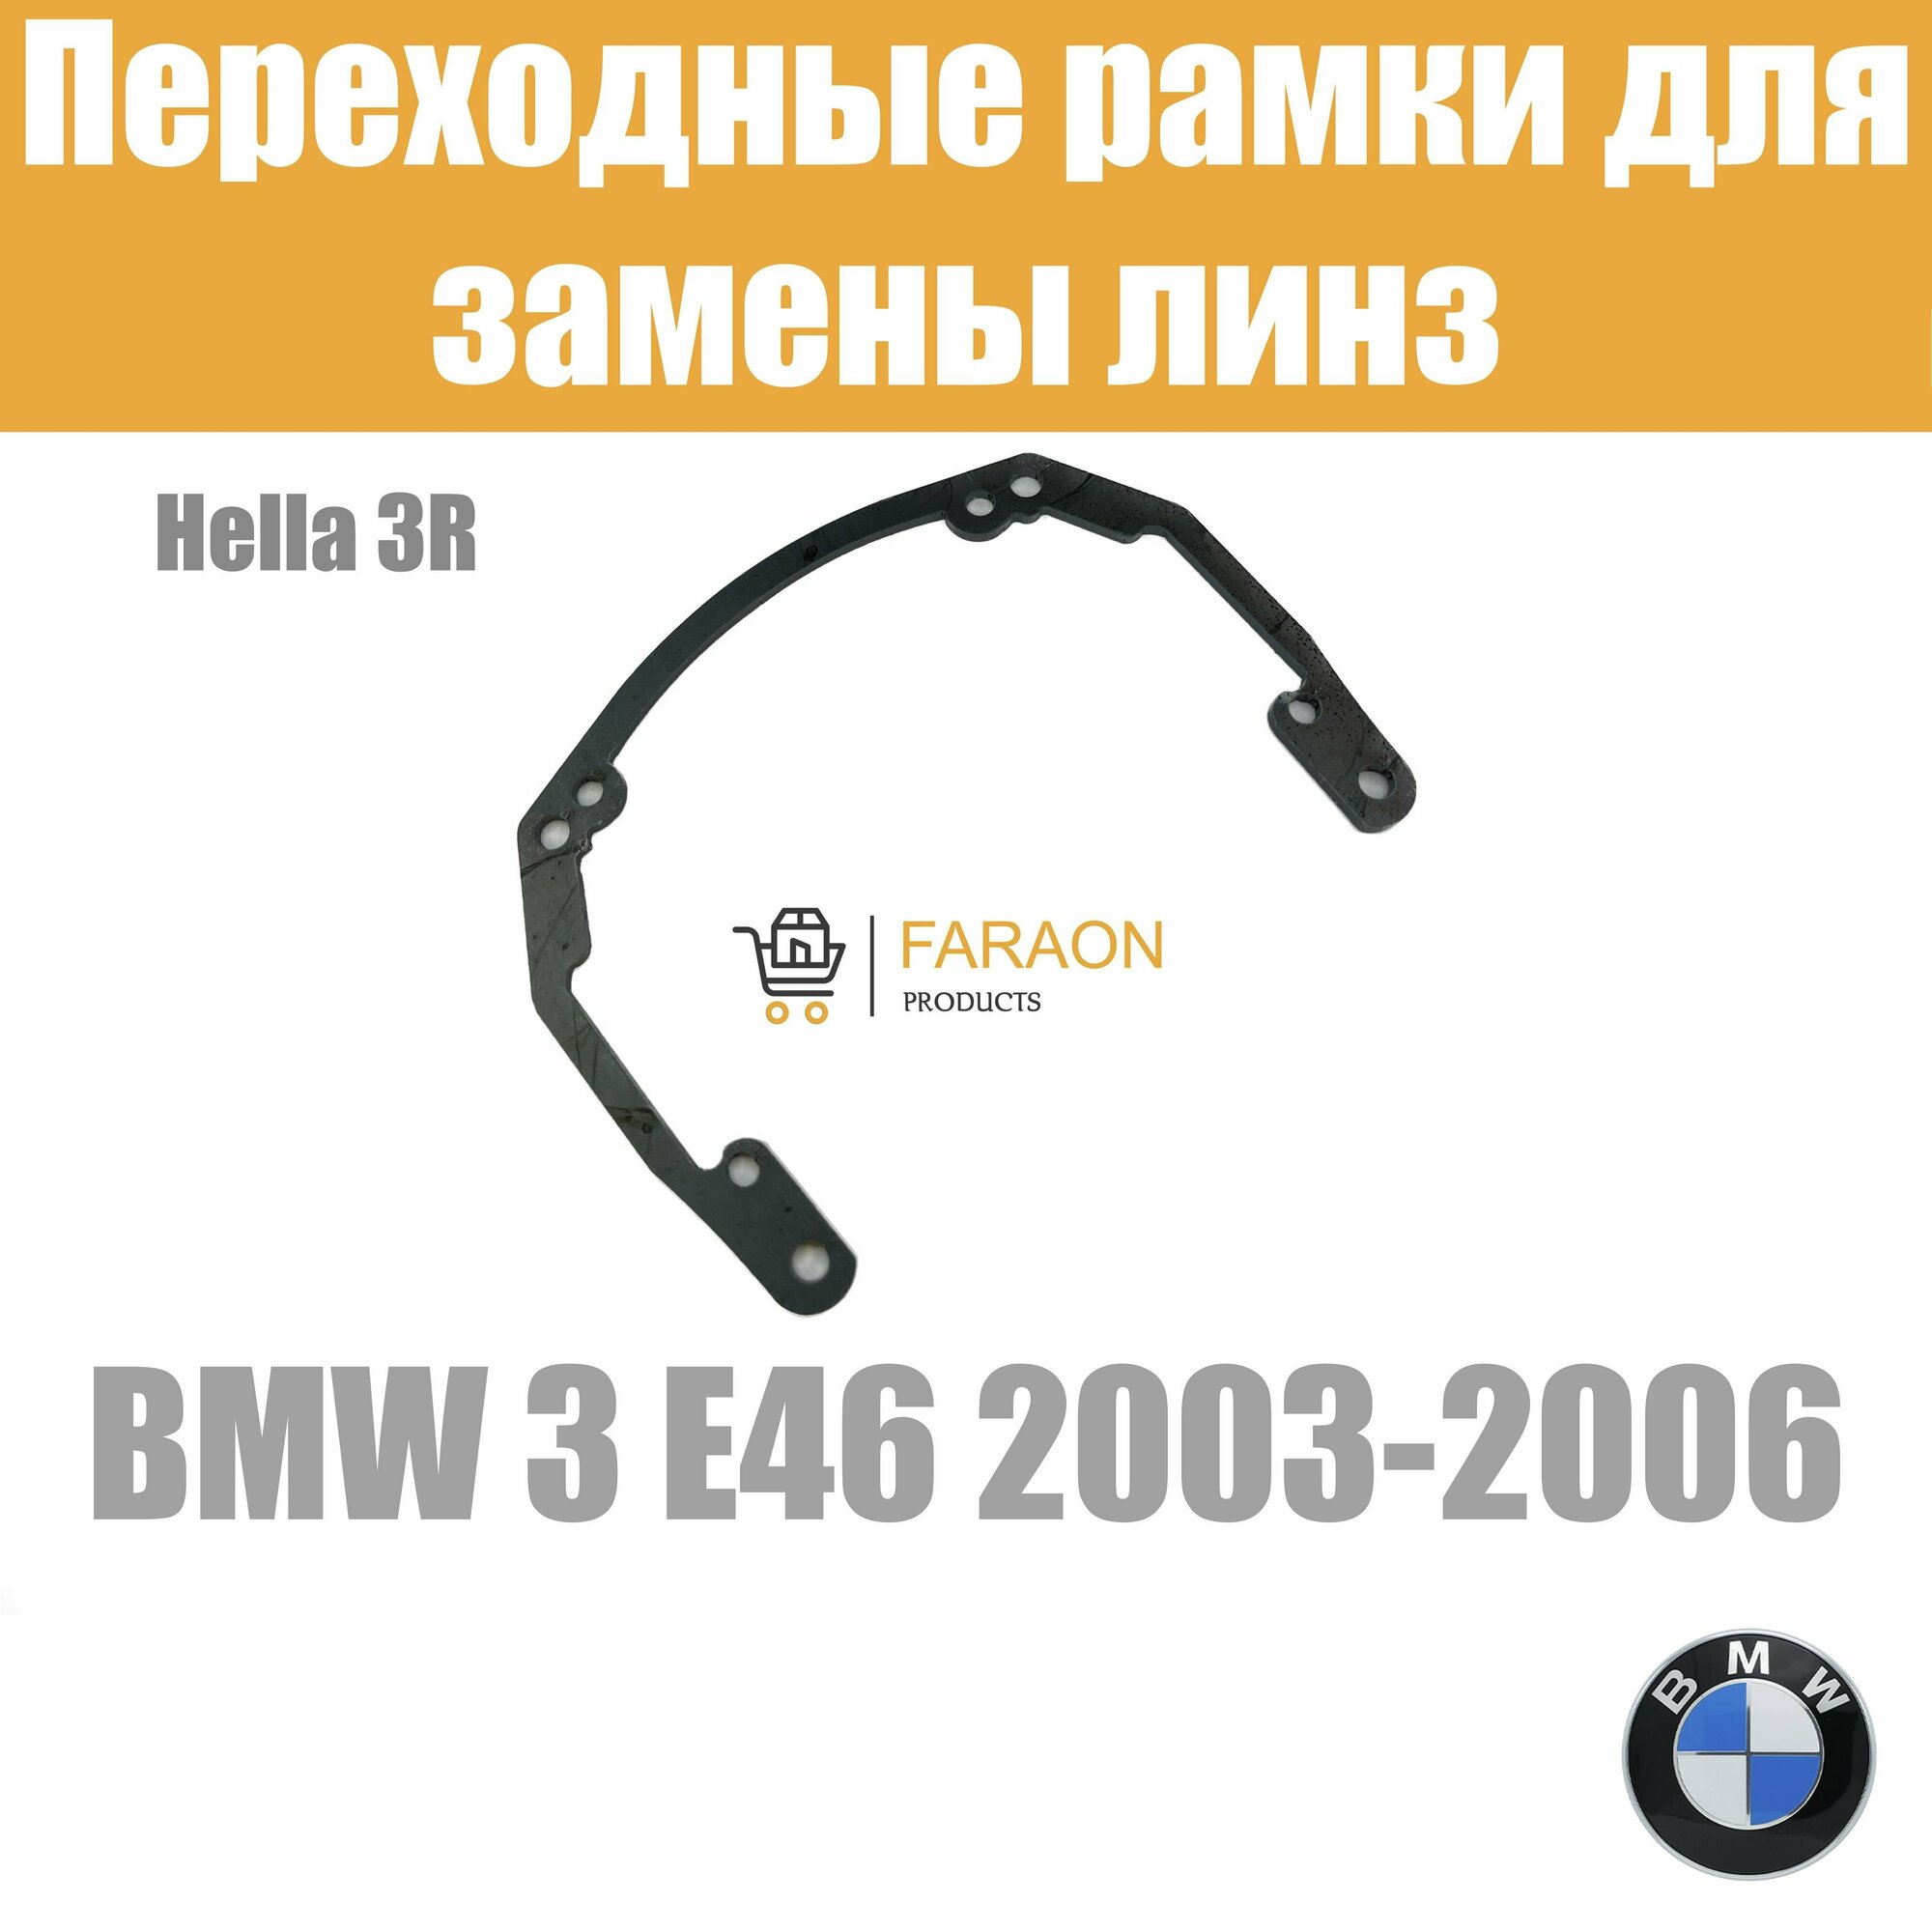 Переходные рамки для BMW 3 E46 sedan (2003 - 2006 г. в.) под модуль Hella 3R/Hella 3 (Комплект 2шт)